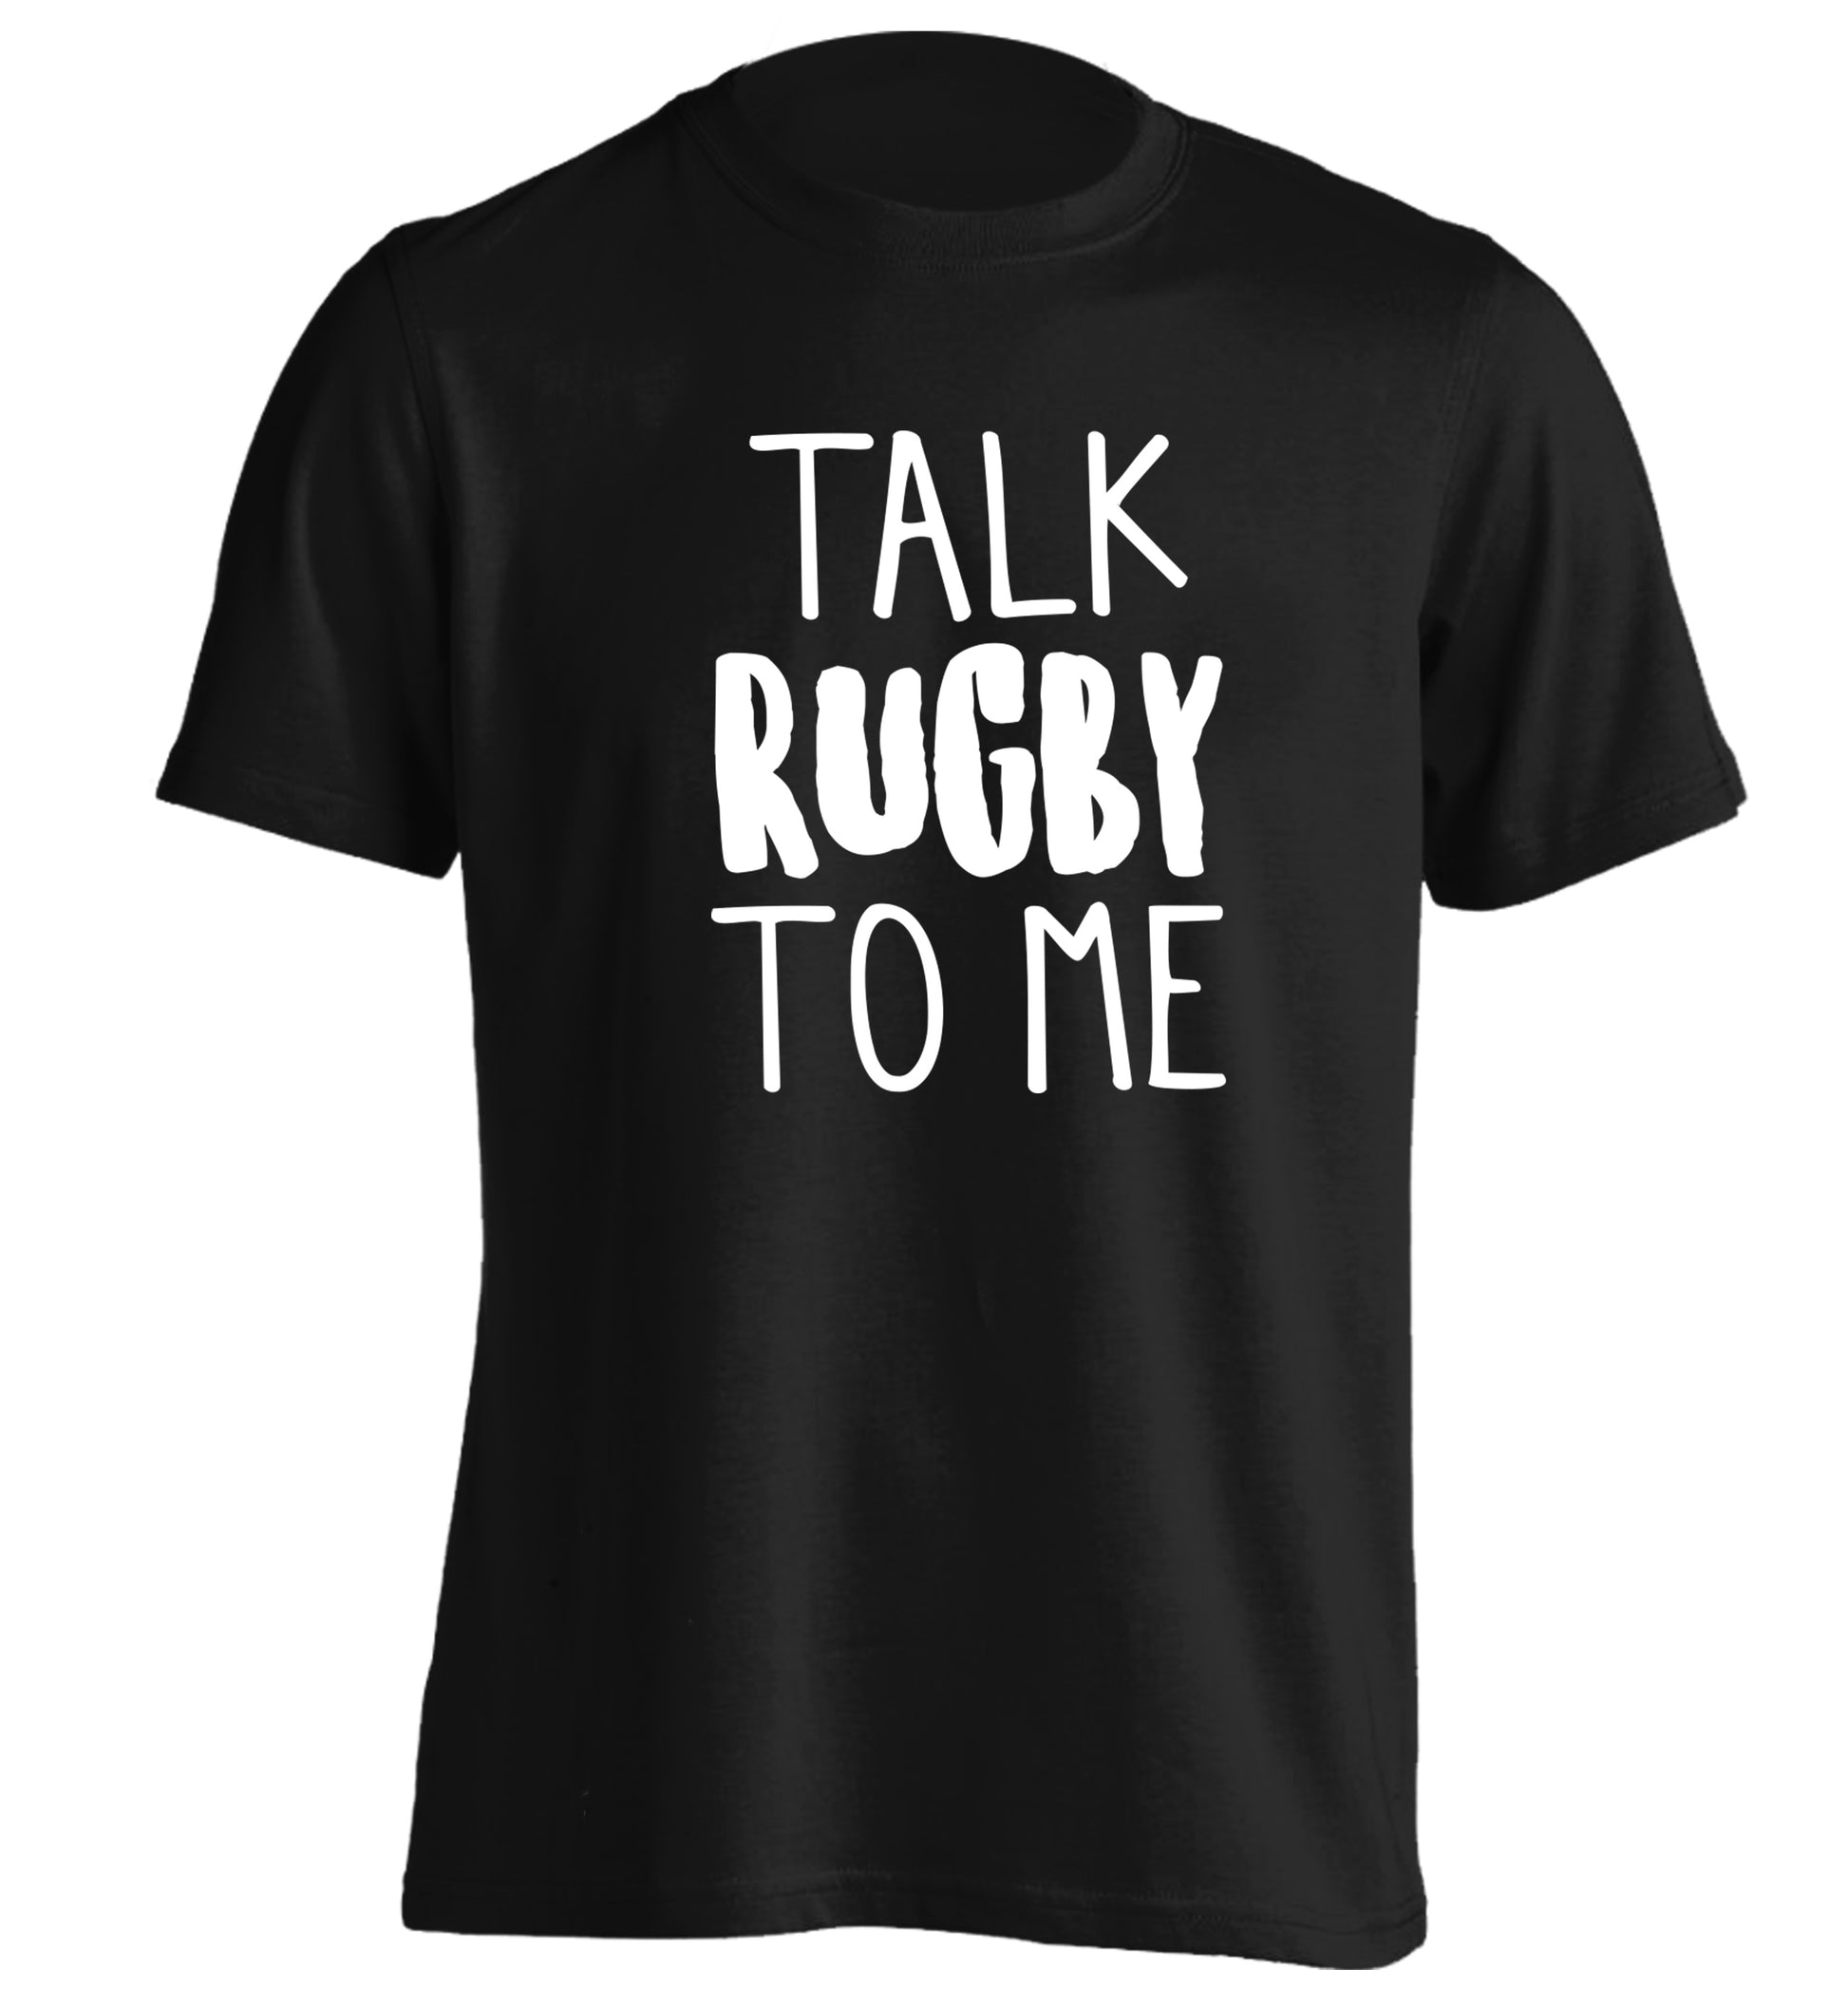 Talk rugby to me adults unisex black Tshirt 2XL